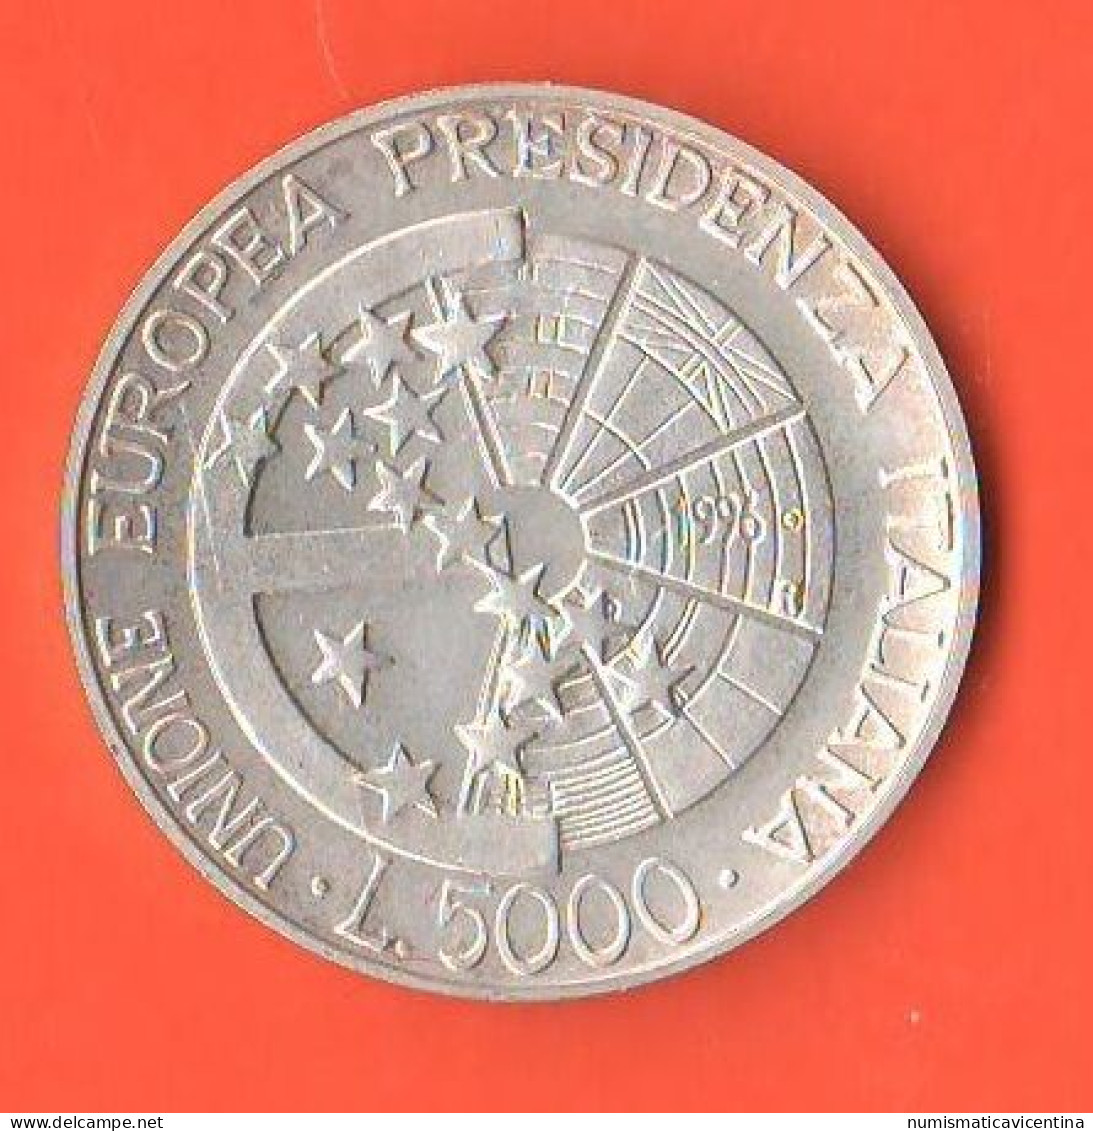 Italia 5000 Lire 1996 Presidenza Cee Italian Presidency European Union Italy Italie Silver Coin - Conmemorativas